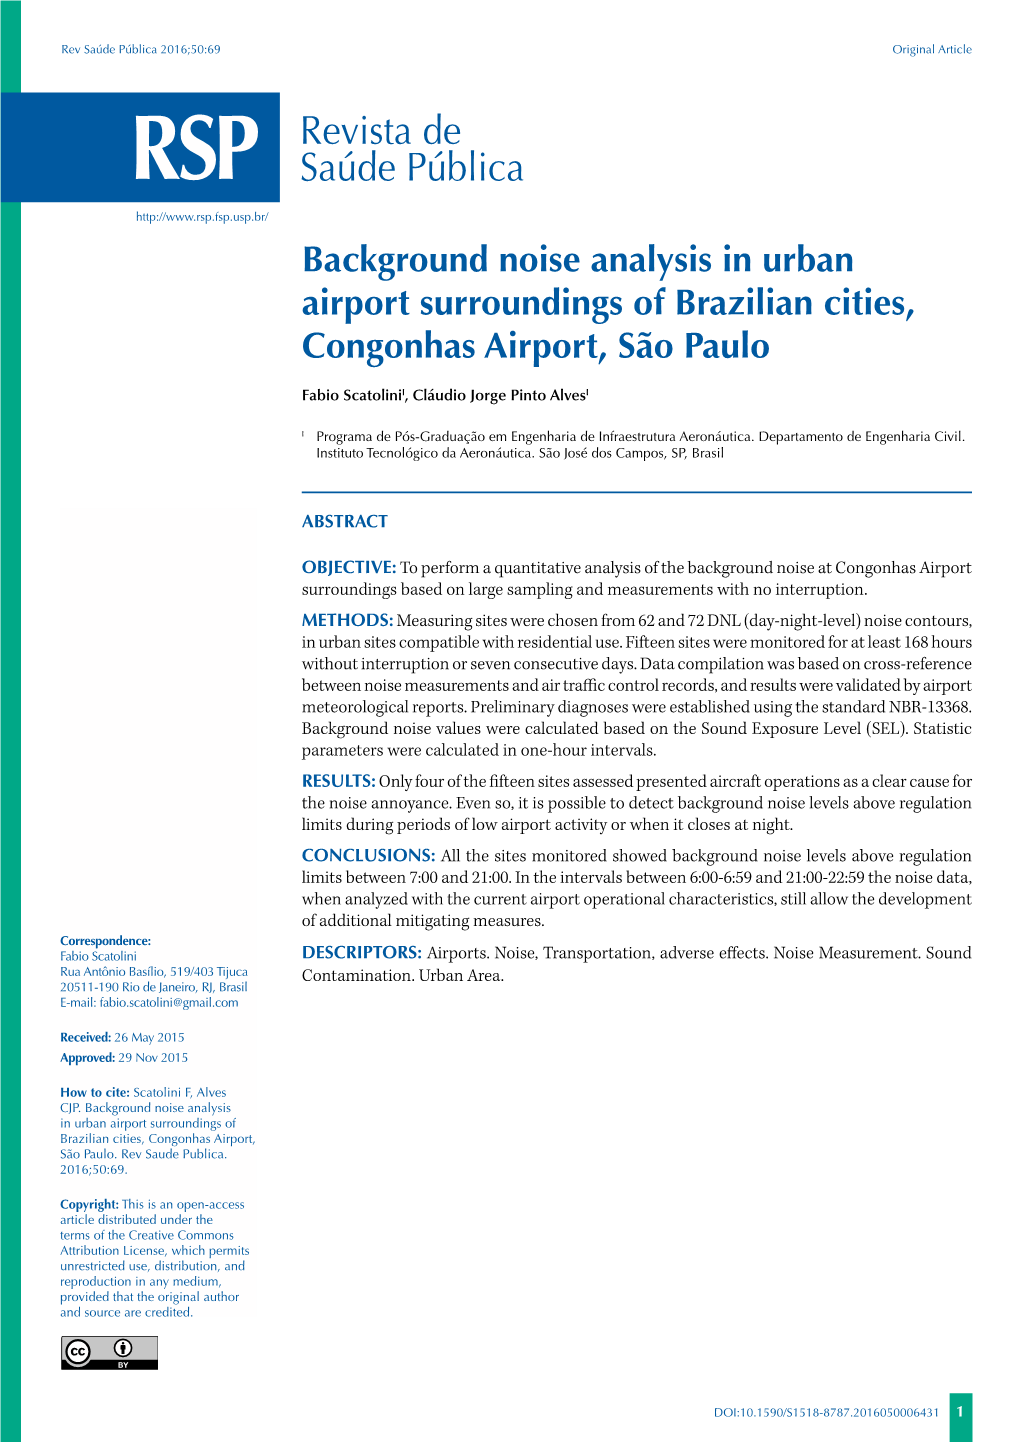 Background Noise Analysis in Urban Airport Surroundings of Brazilian Cities, Congonhas Airport, São Paulo